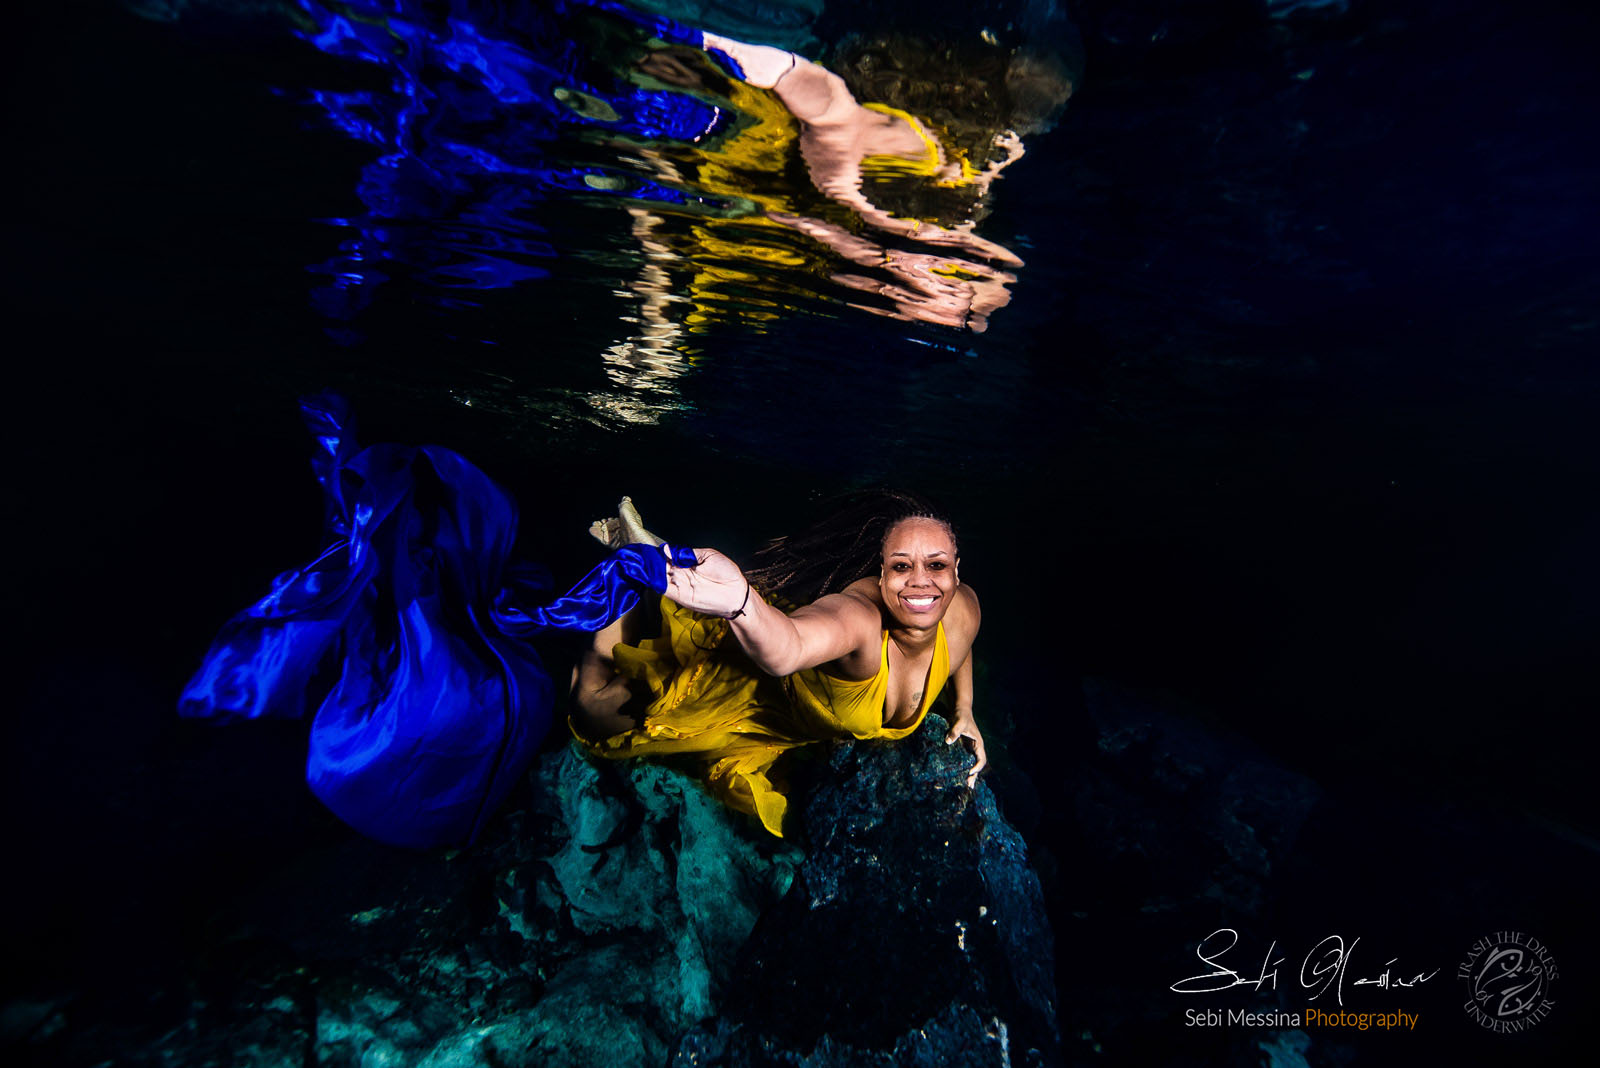 Underwater Modelling in a cenote near Tulum - Sebi Messina Photography